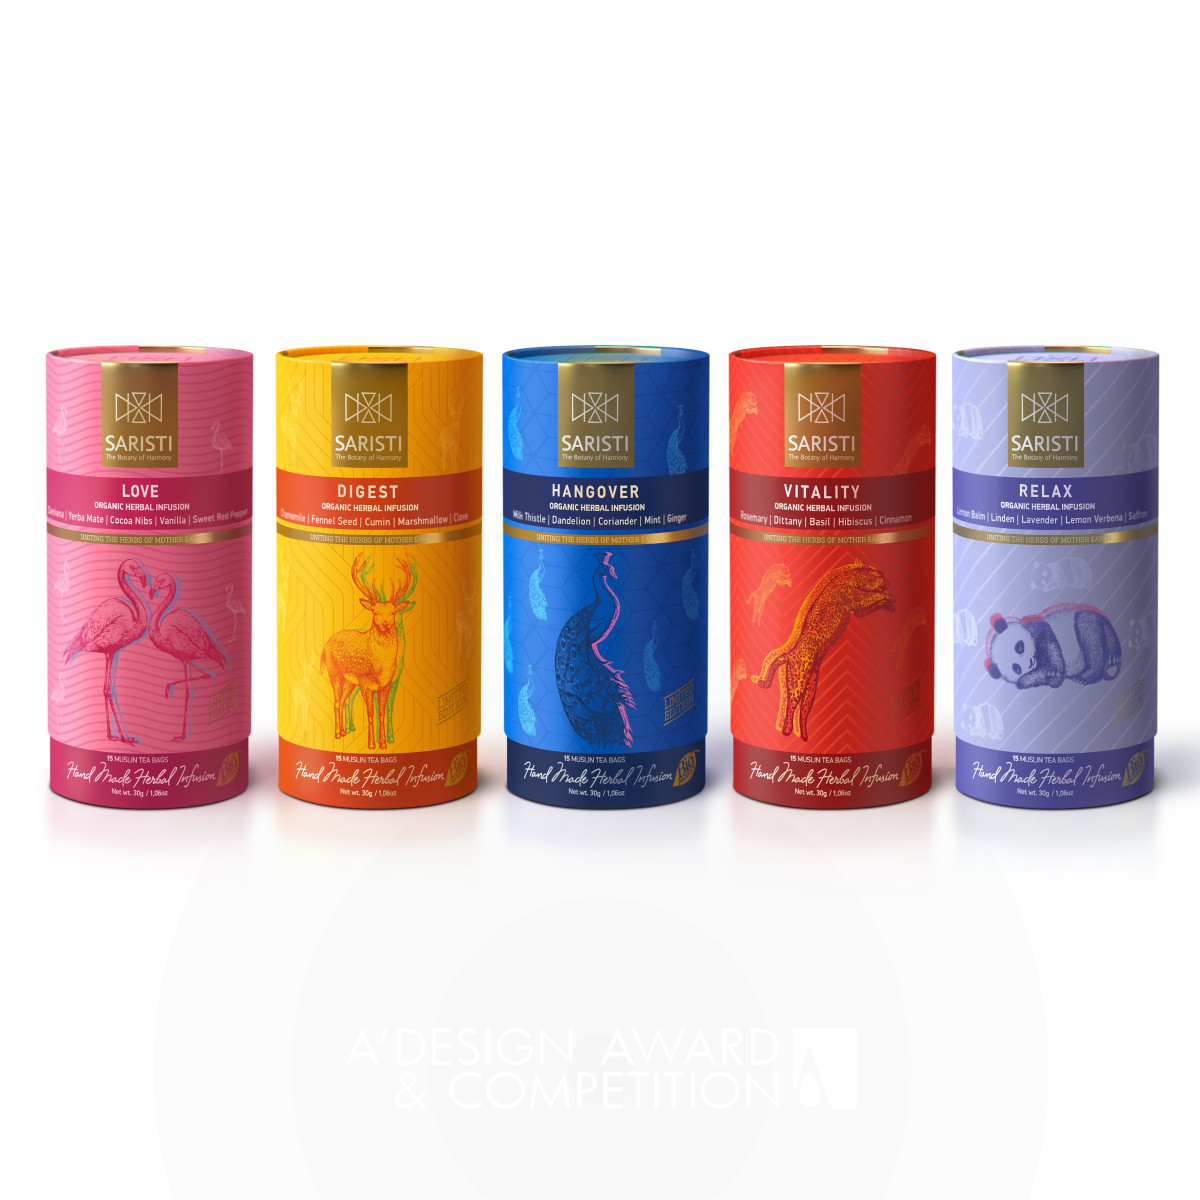 SARISTI Dry tea packaging by Antonia Skaraki